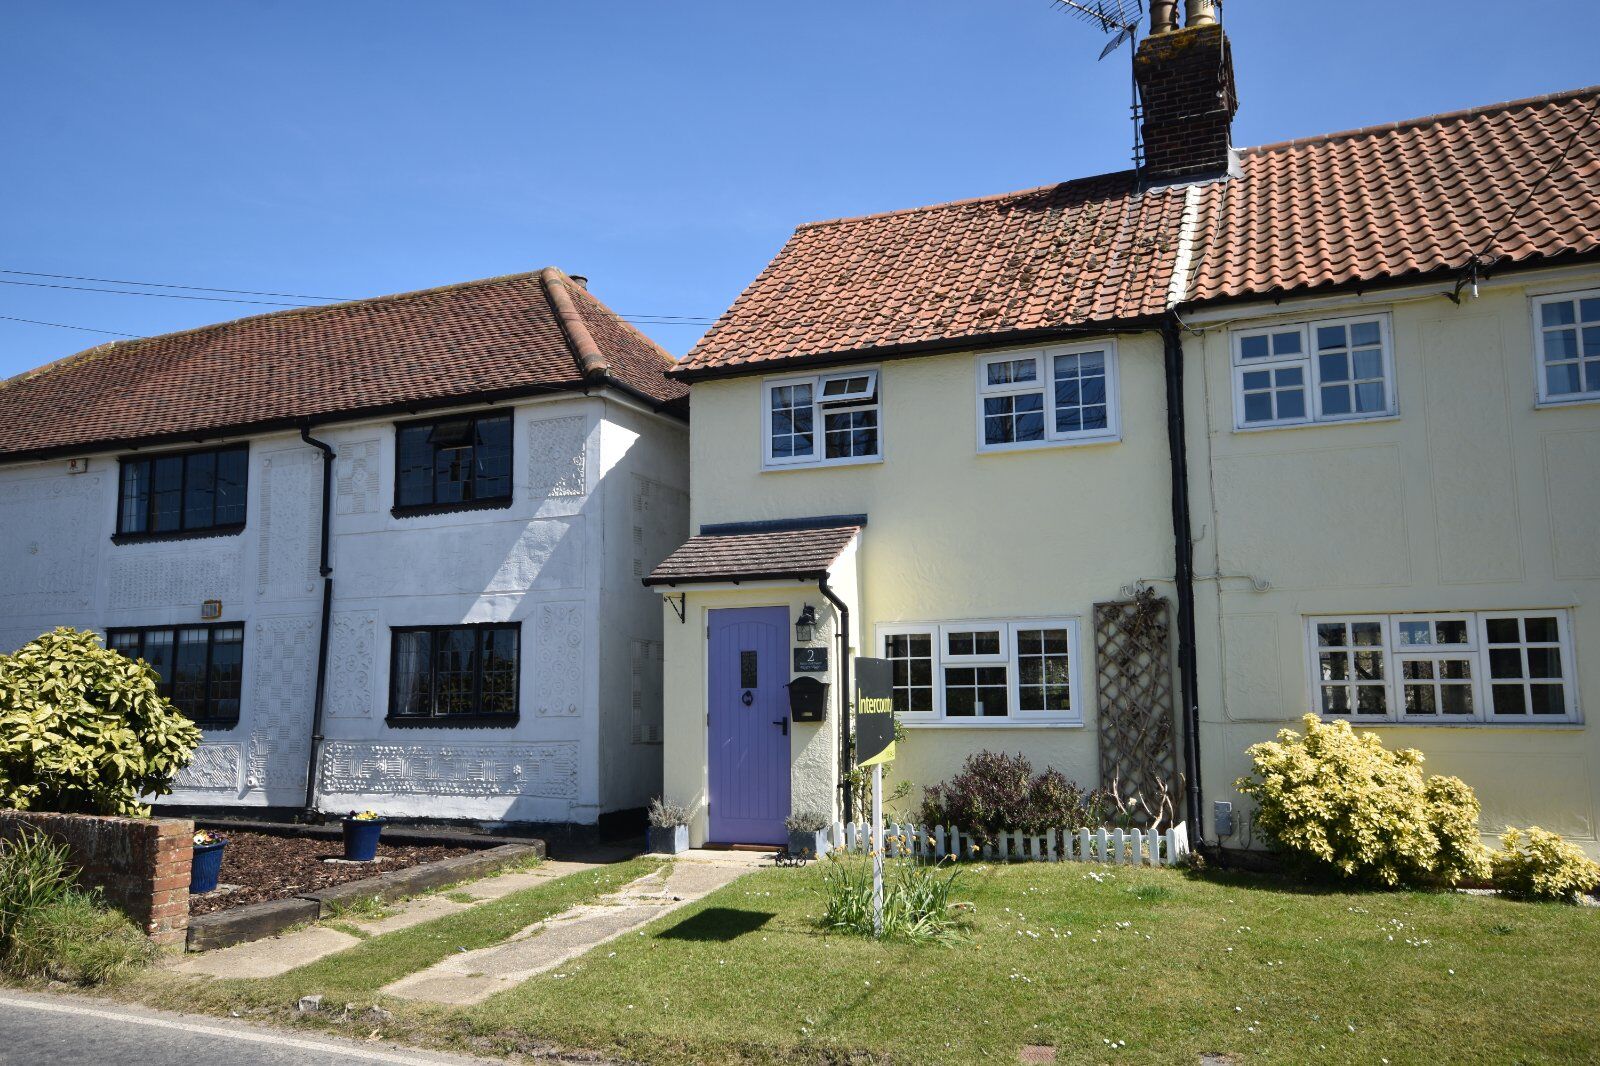 3 bedroom semi detached house for sale Rose Cottages, Henham Road, CB11, main image